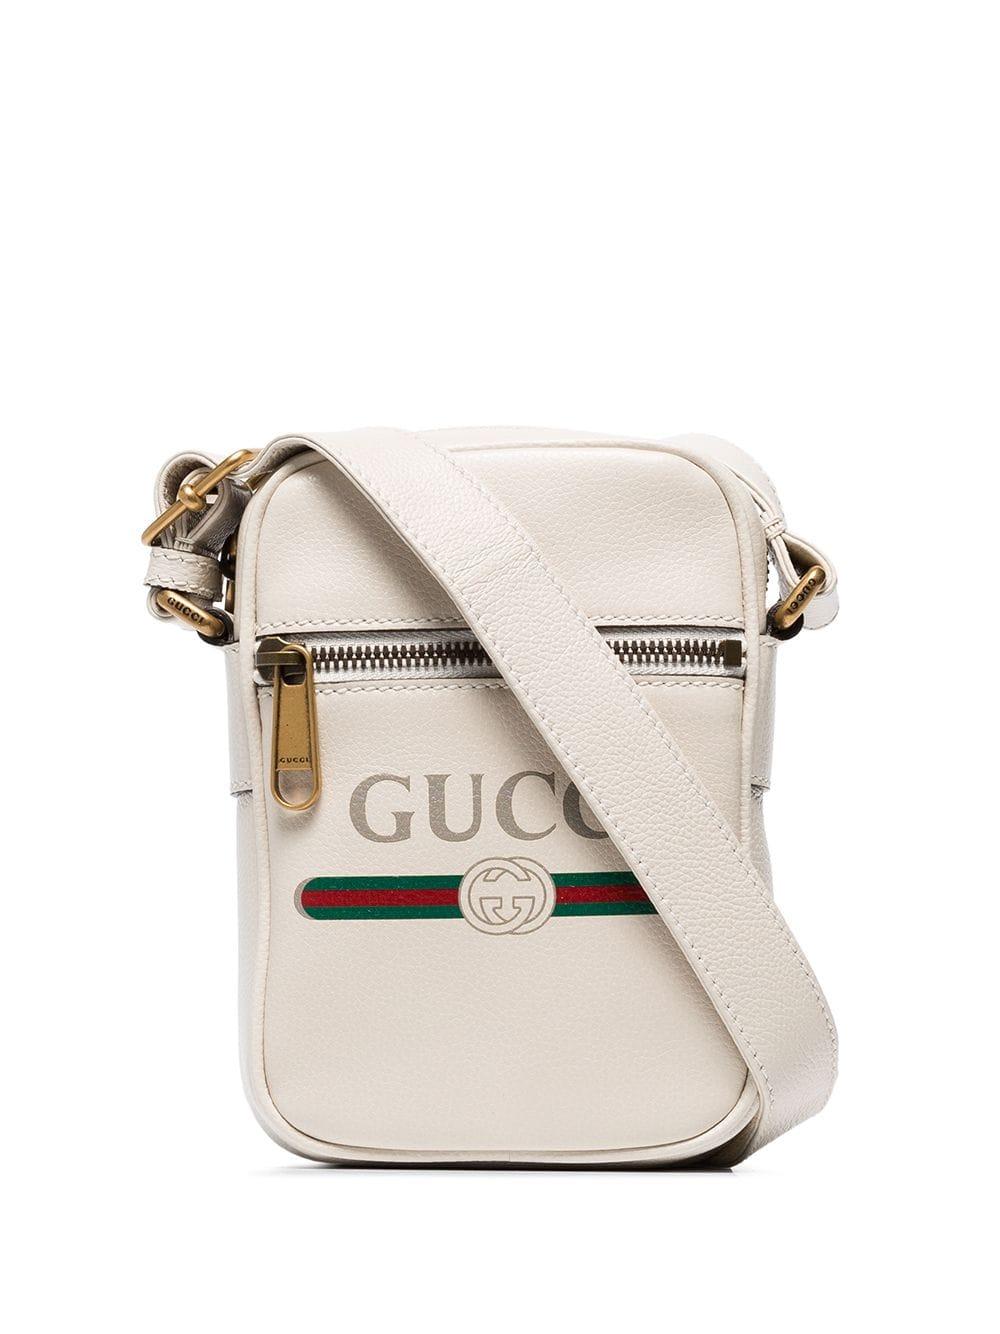 Gucci Shoulder Bags for Men - Shop Now on FARFETCH